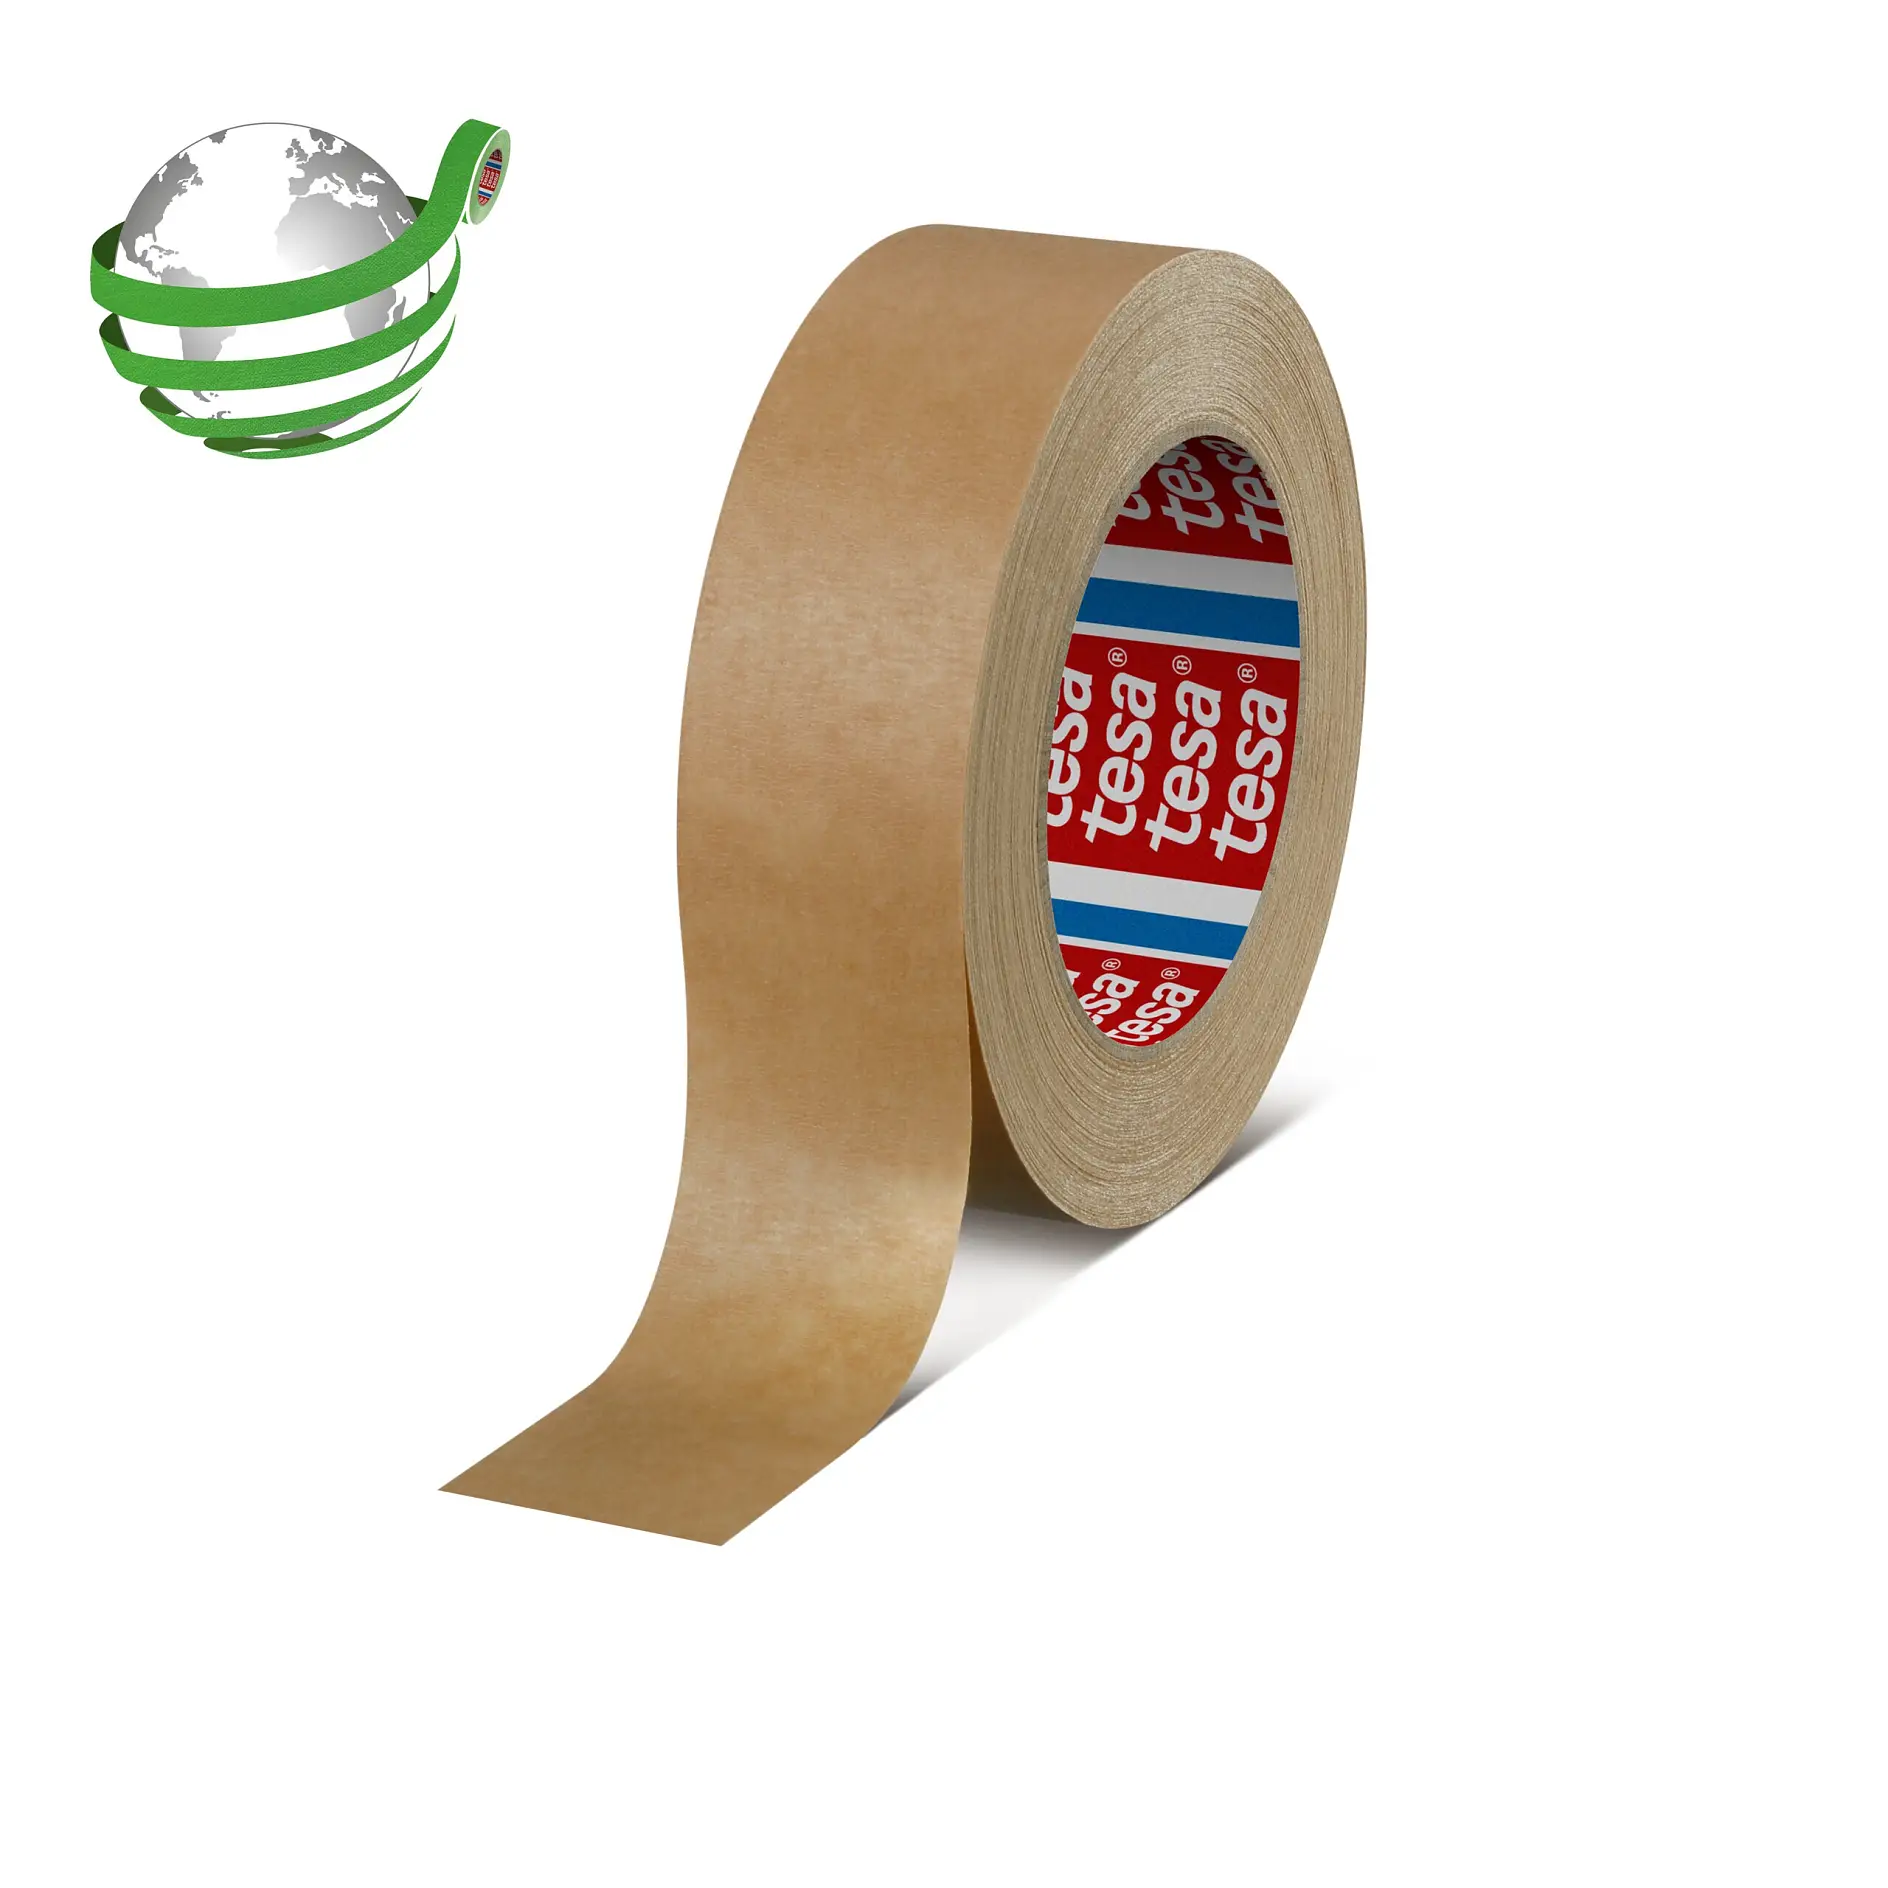 tesa-4309-pv1-masking-tape-for-paint-spraying-120°C-brown-043090001401-pr-with-marker